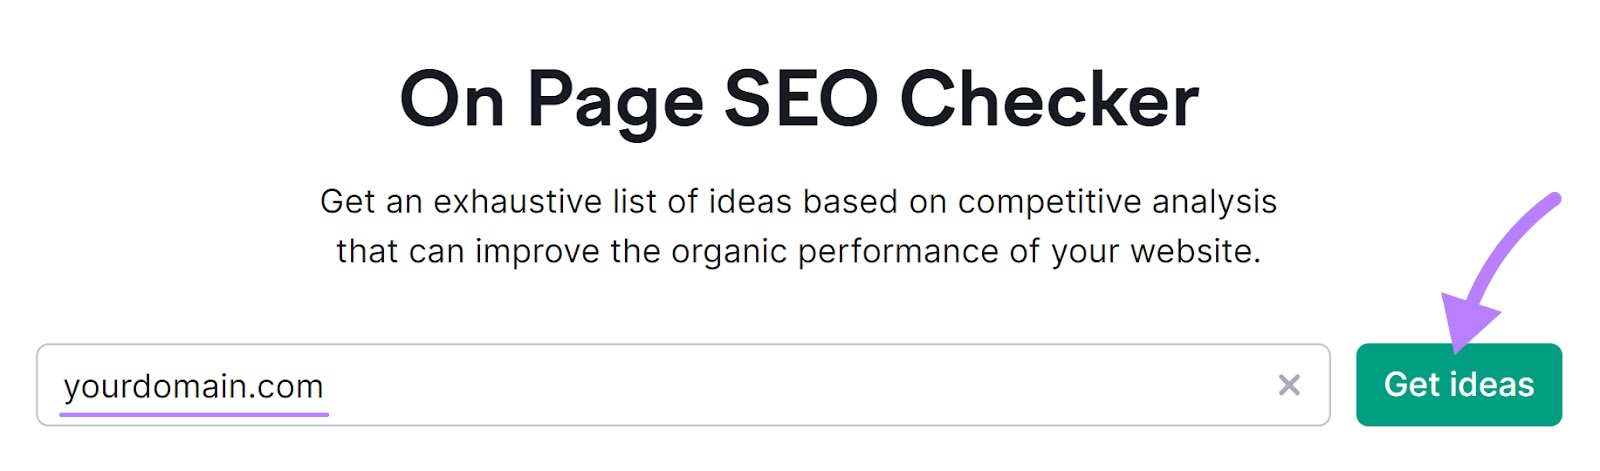 On Page SEO Checker search bar